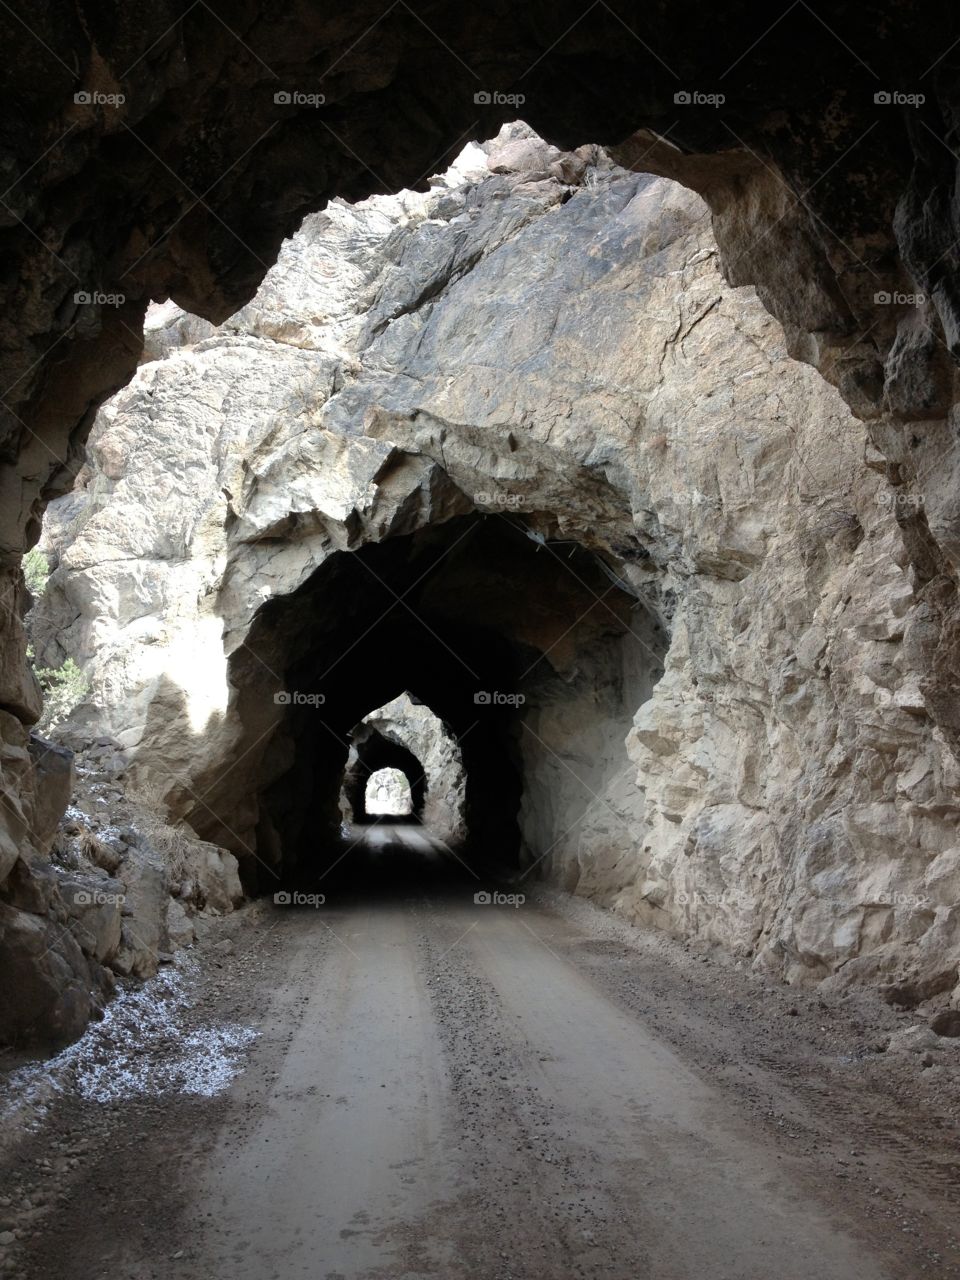 Tunnels. Burns Vista, CO tunnels